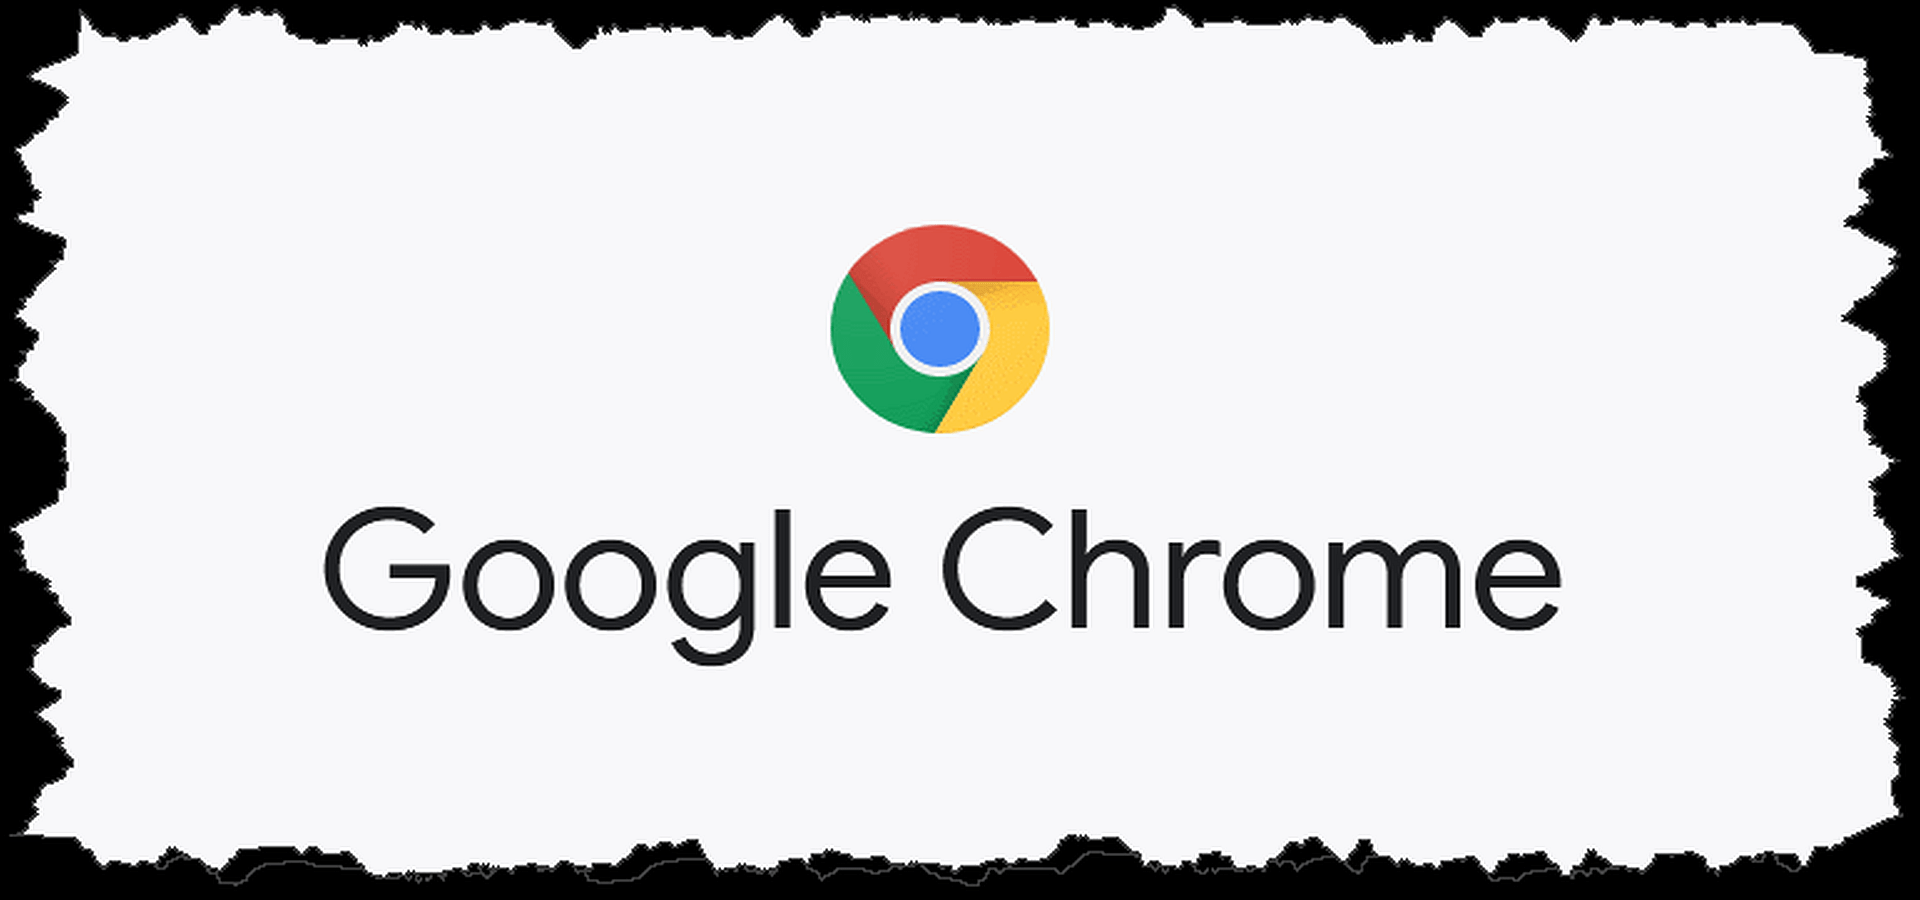 Google Chrome Audio/Video Feature